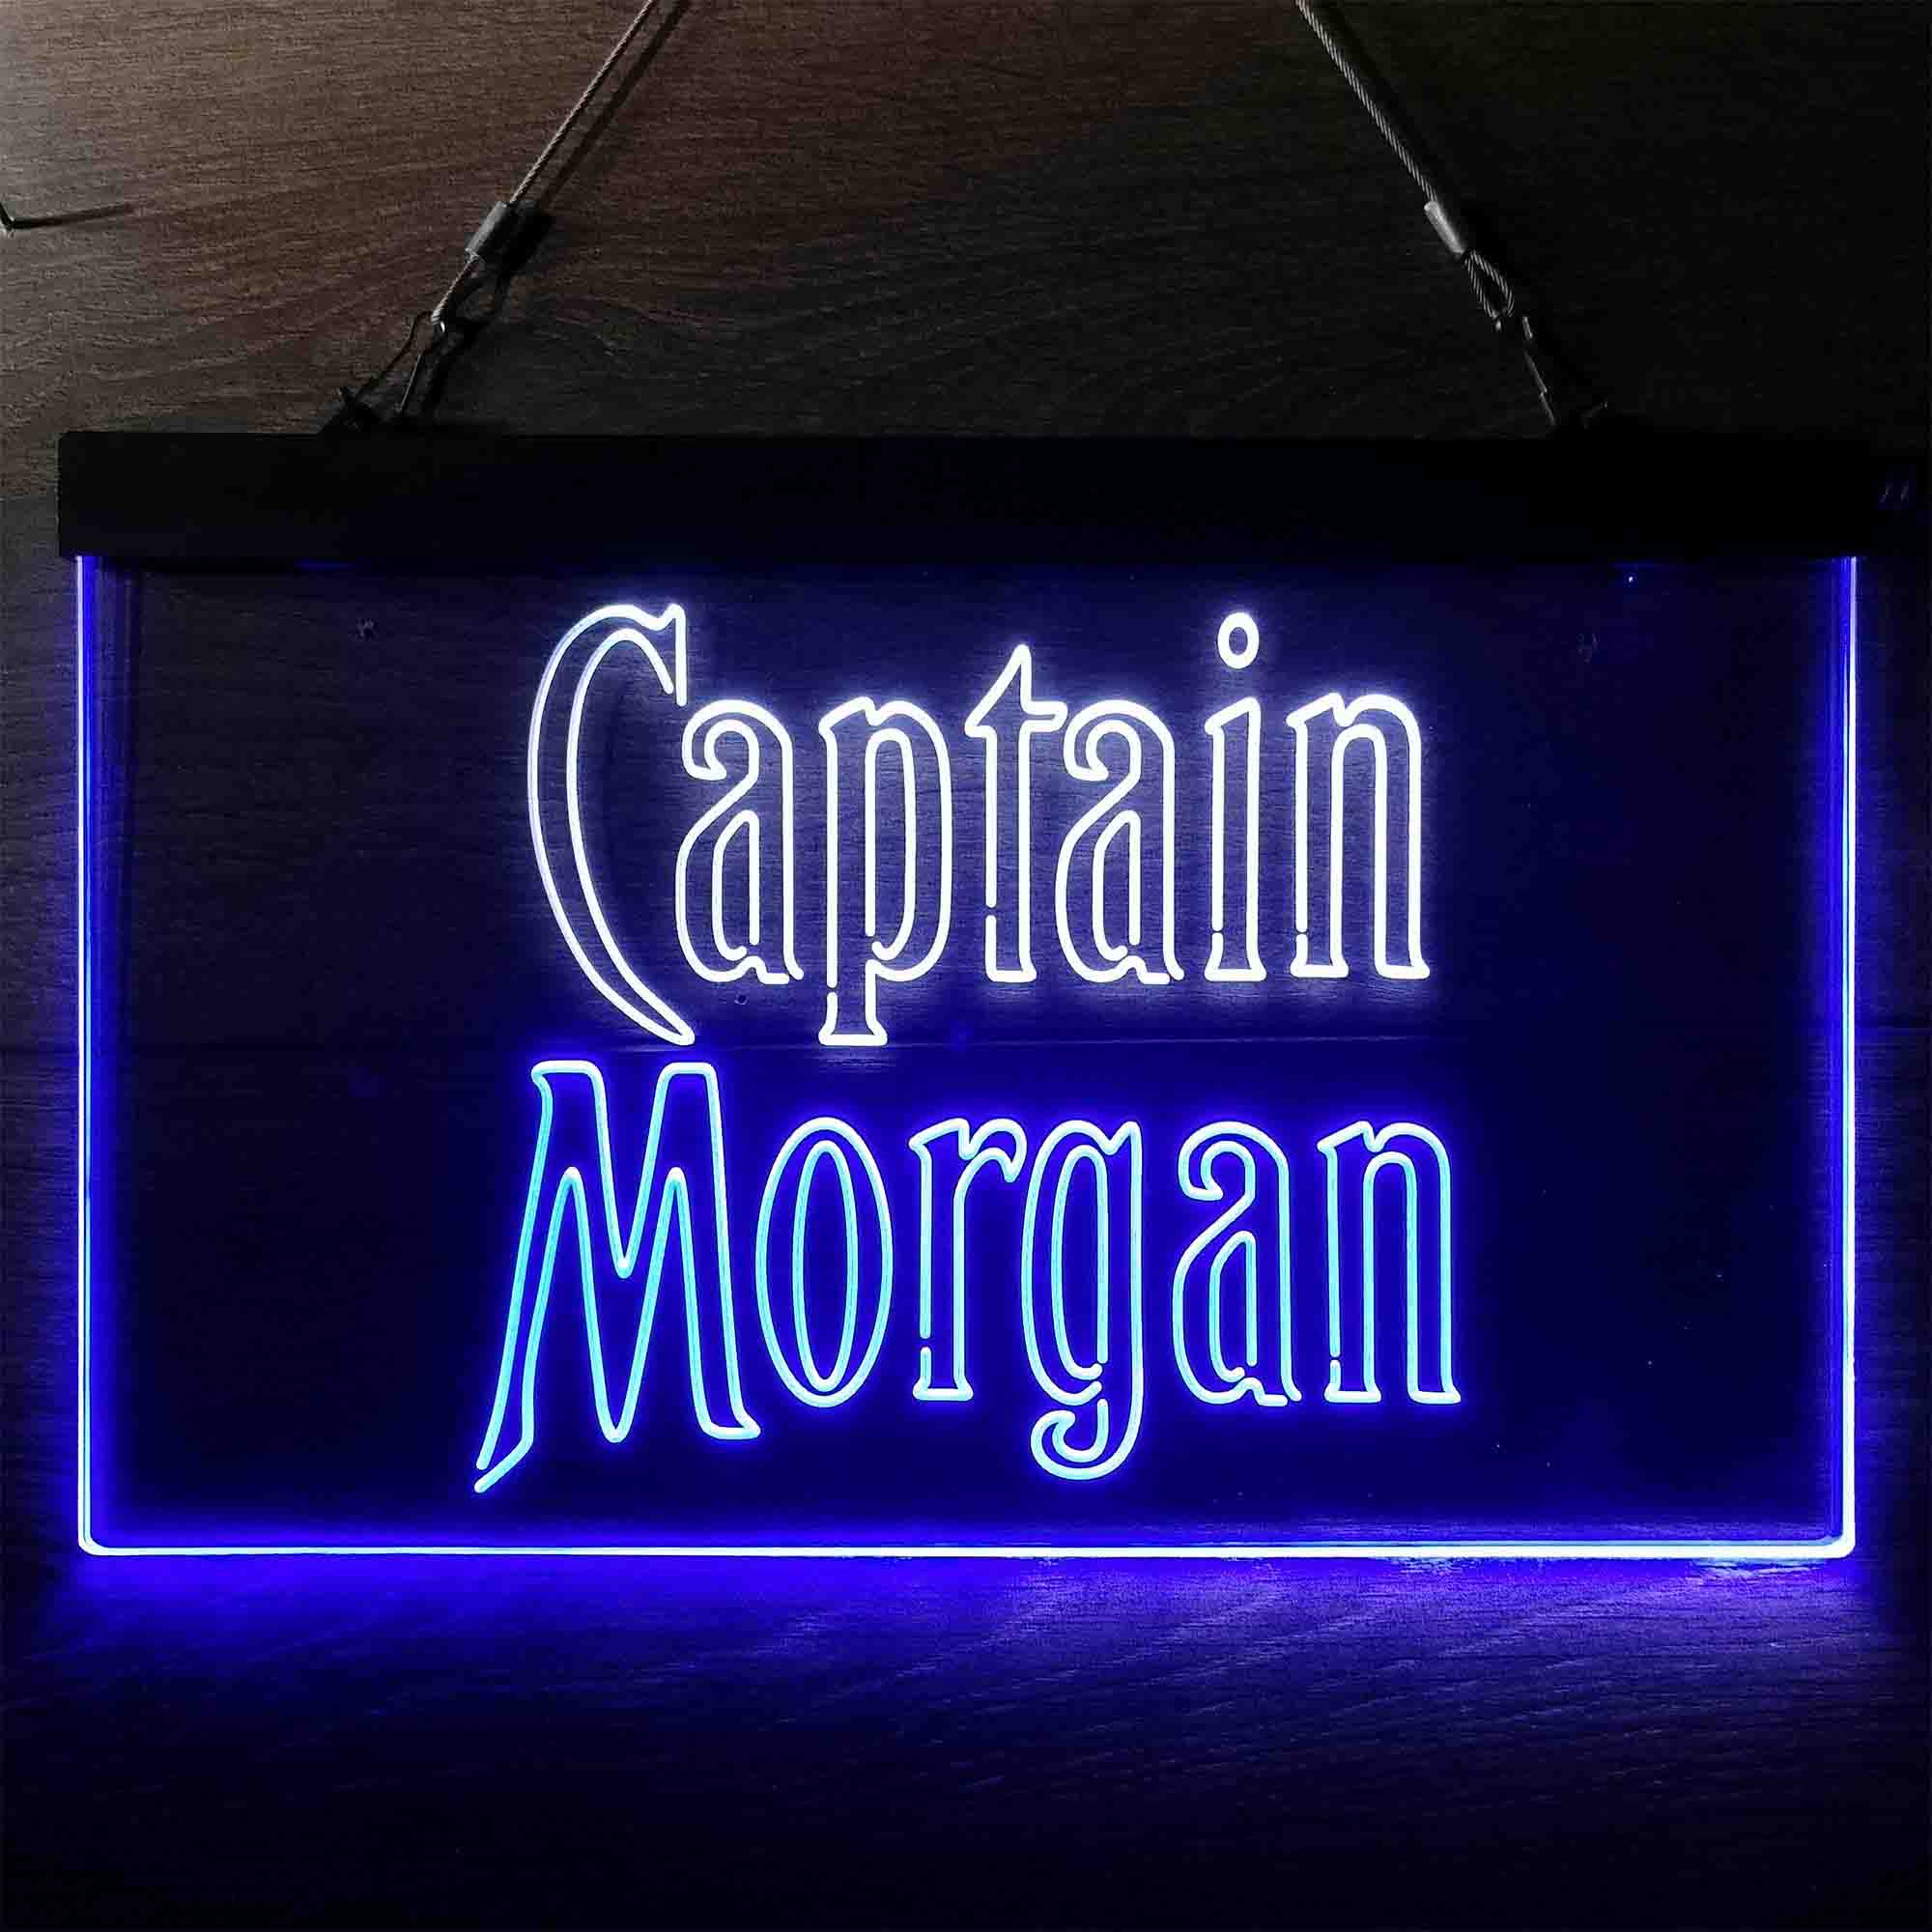 Captain Morgan Wordmark Neon-Like LED Sign